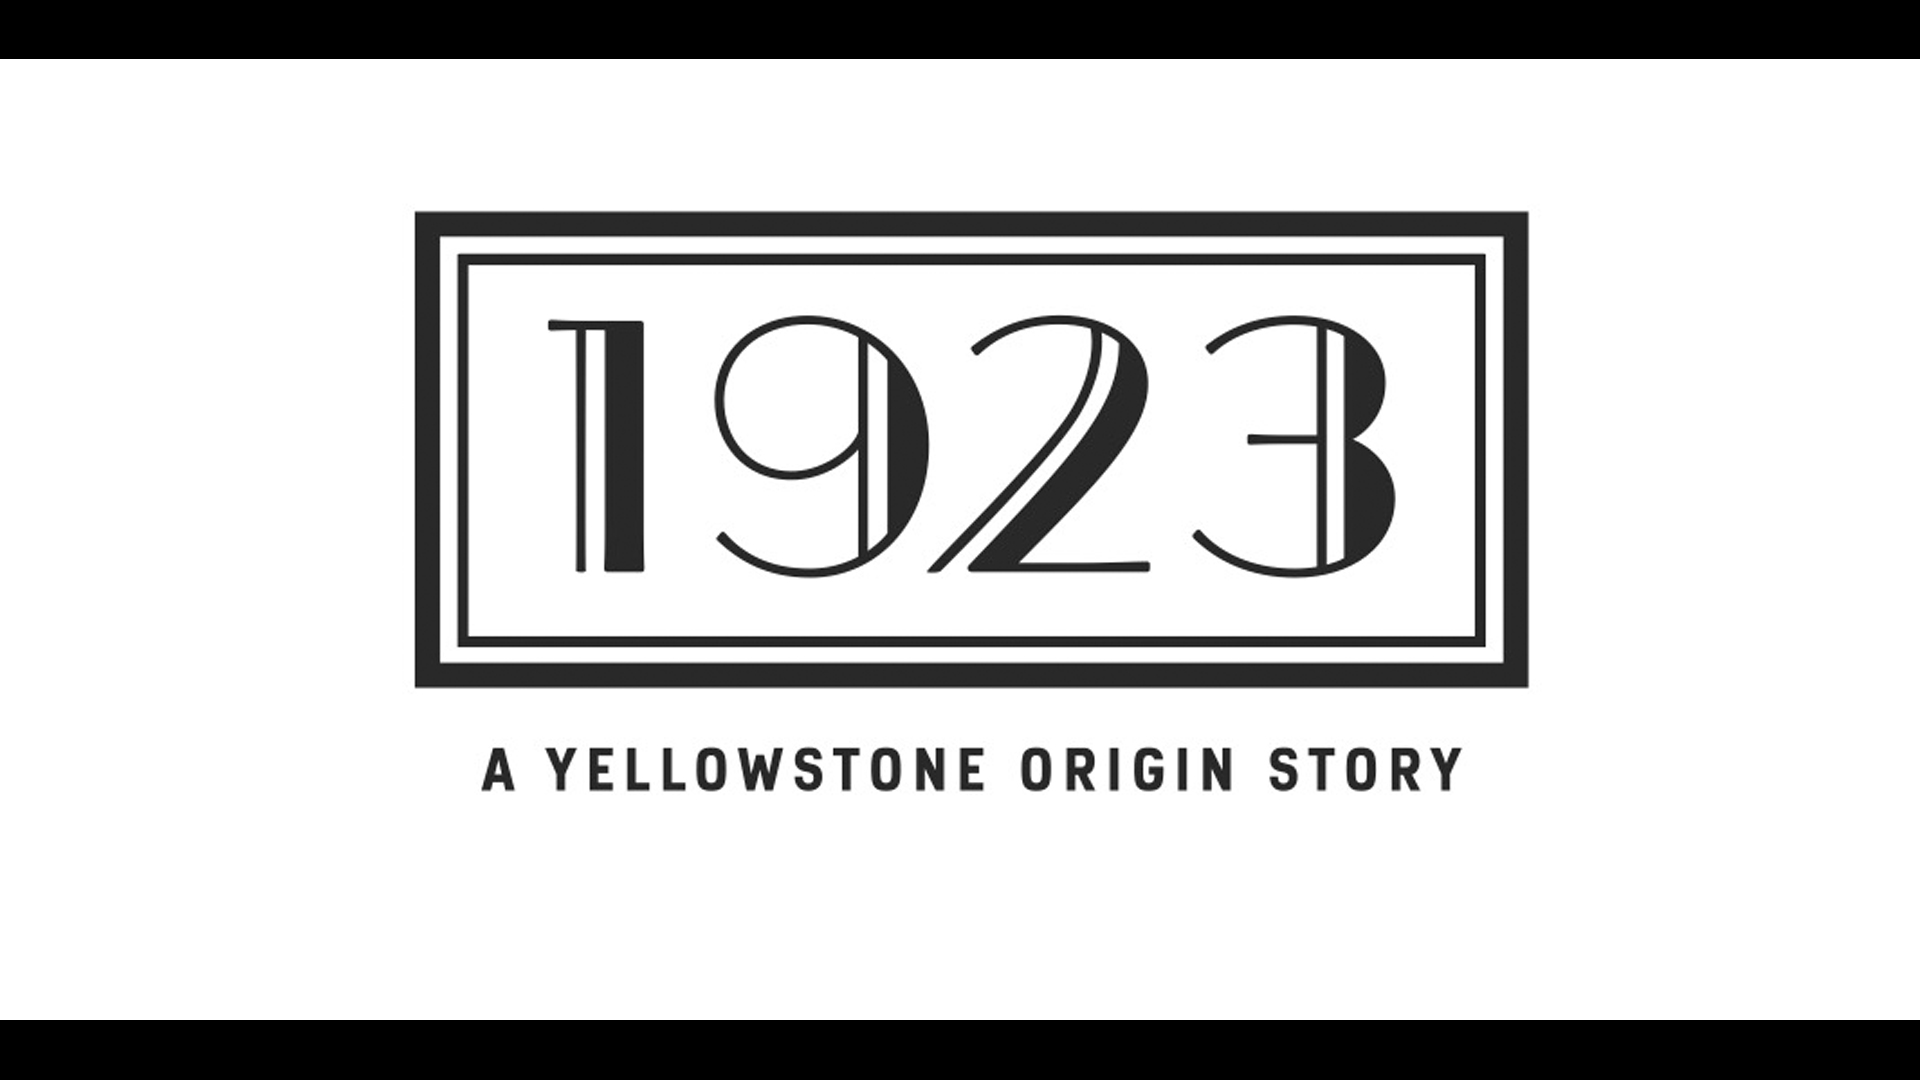 Yellowstone Prequel Series 1923 To Premiere Dec. 18 On Paramount+